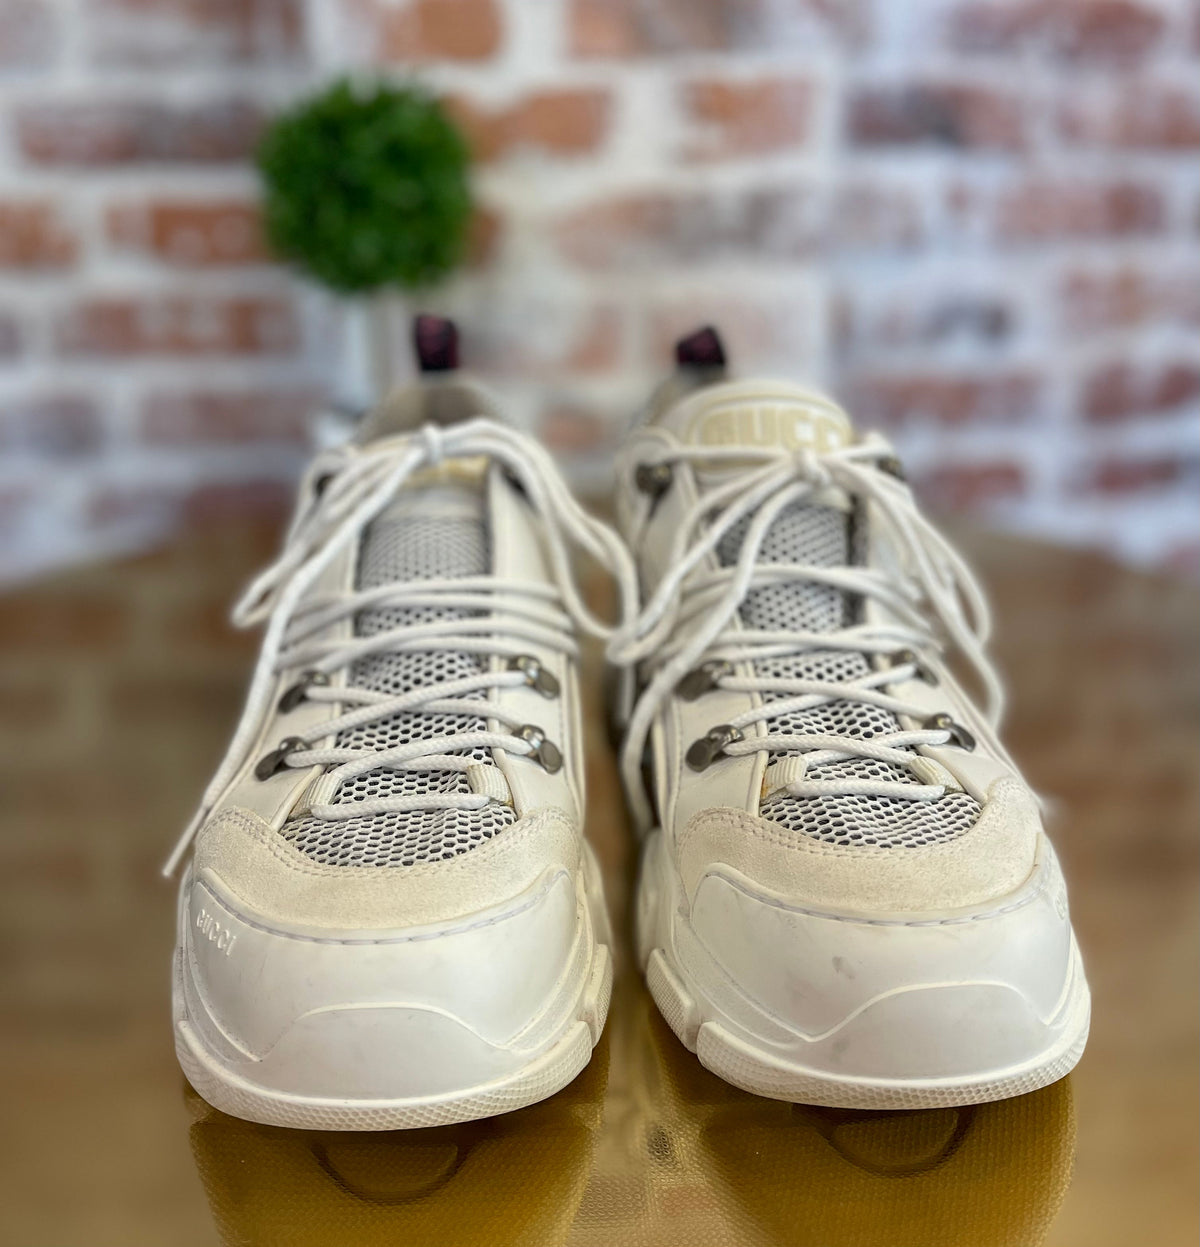 Gucci White Flash Trek Men’s Sneakers